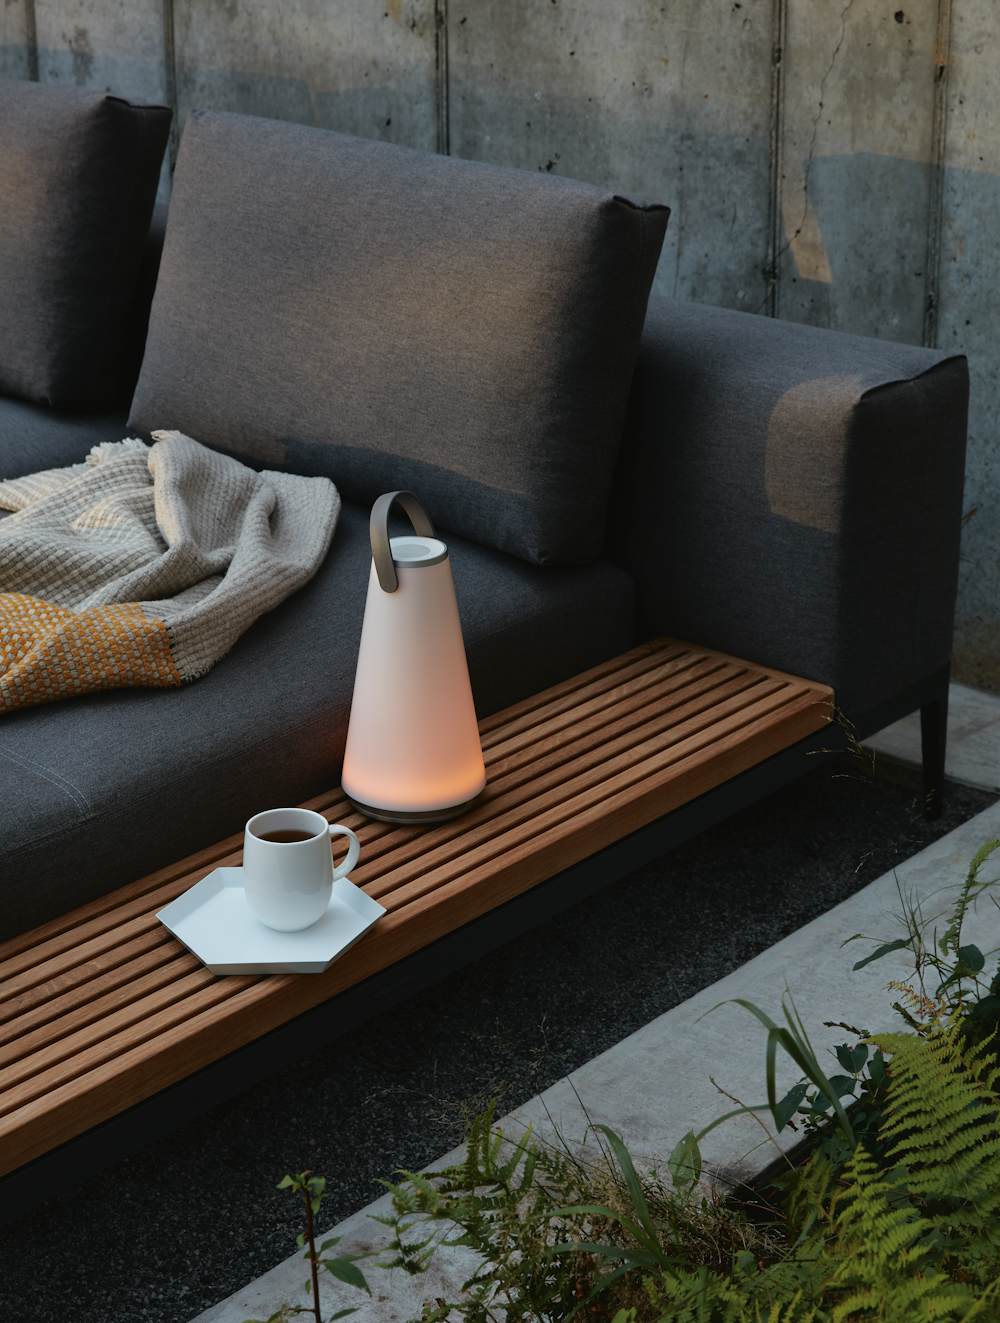 Uma Sound Lantern in an outdoor patio setting